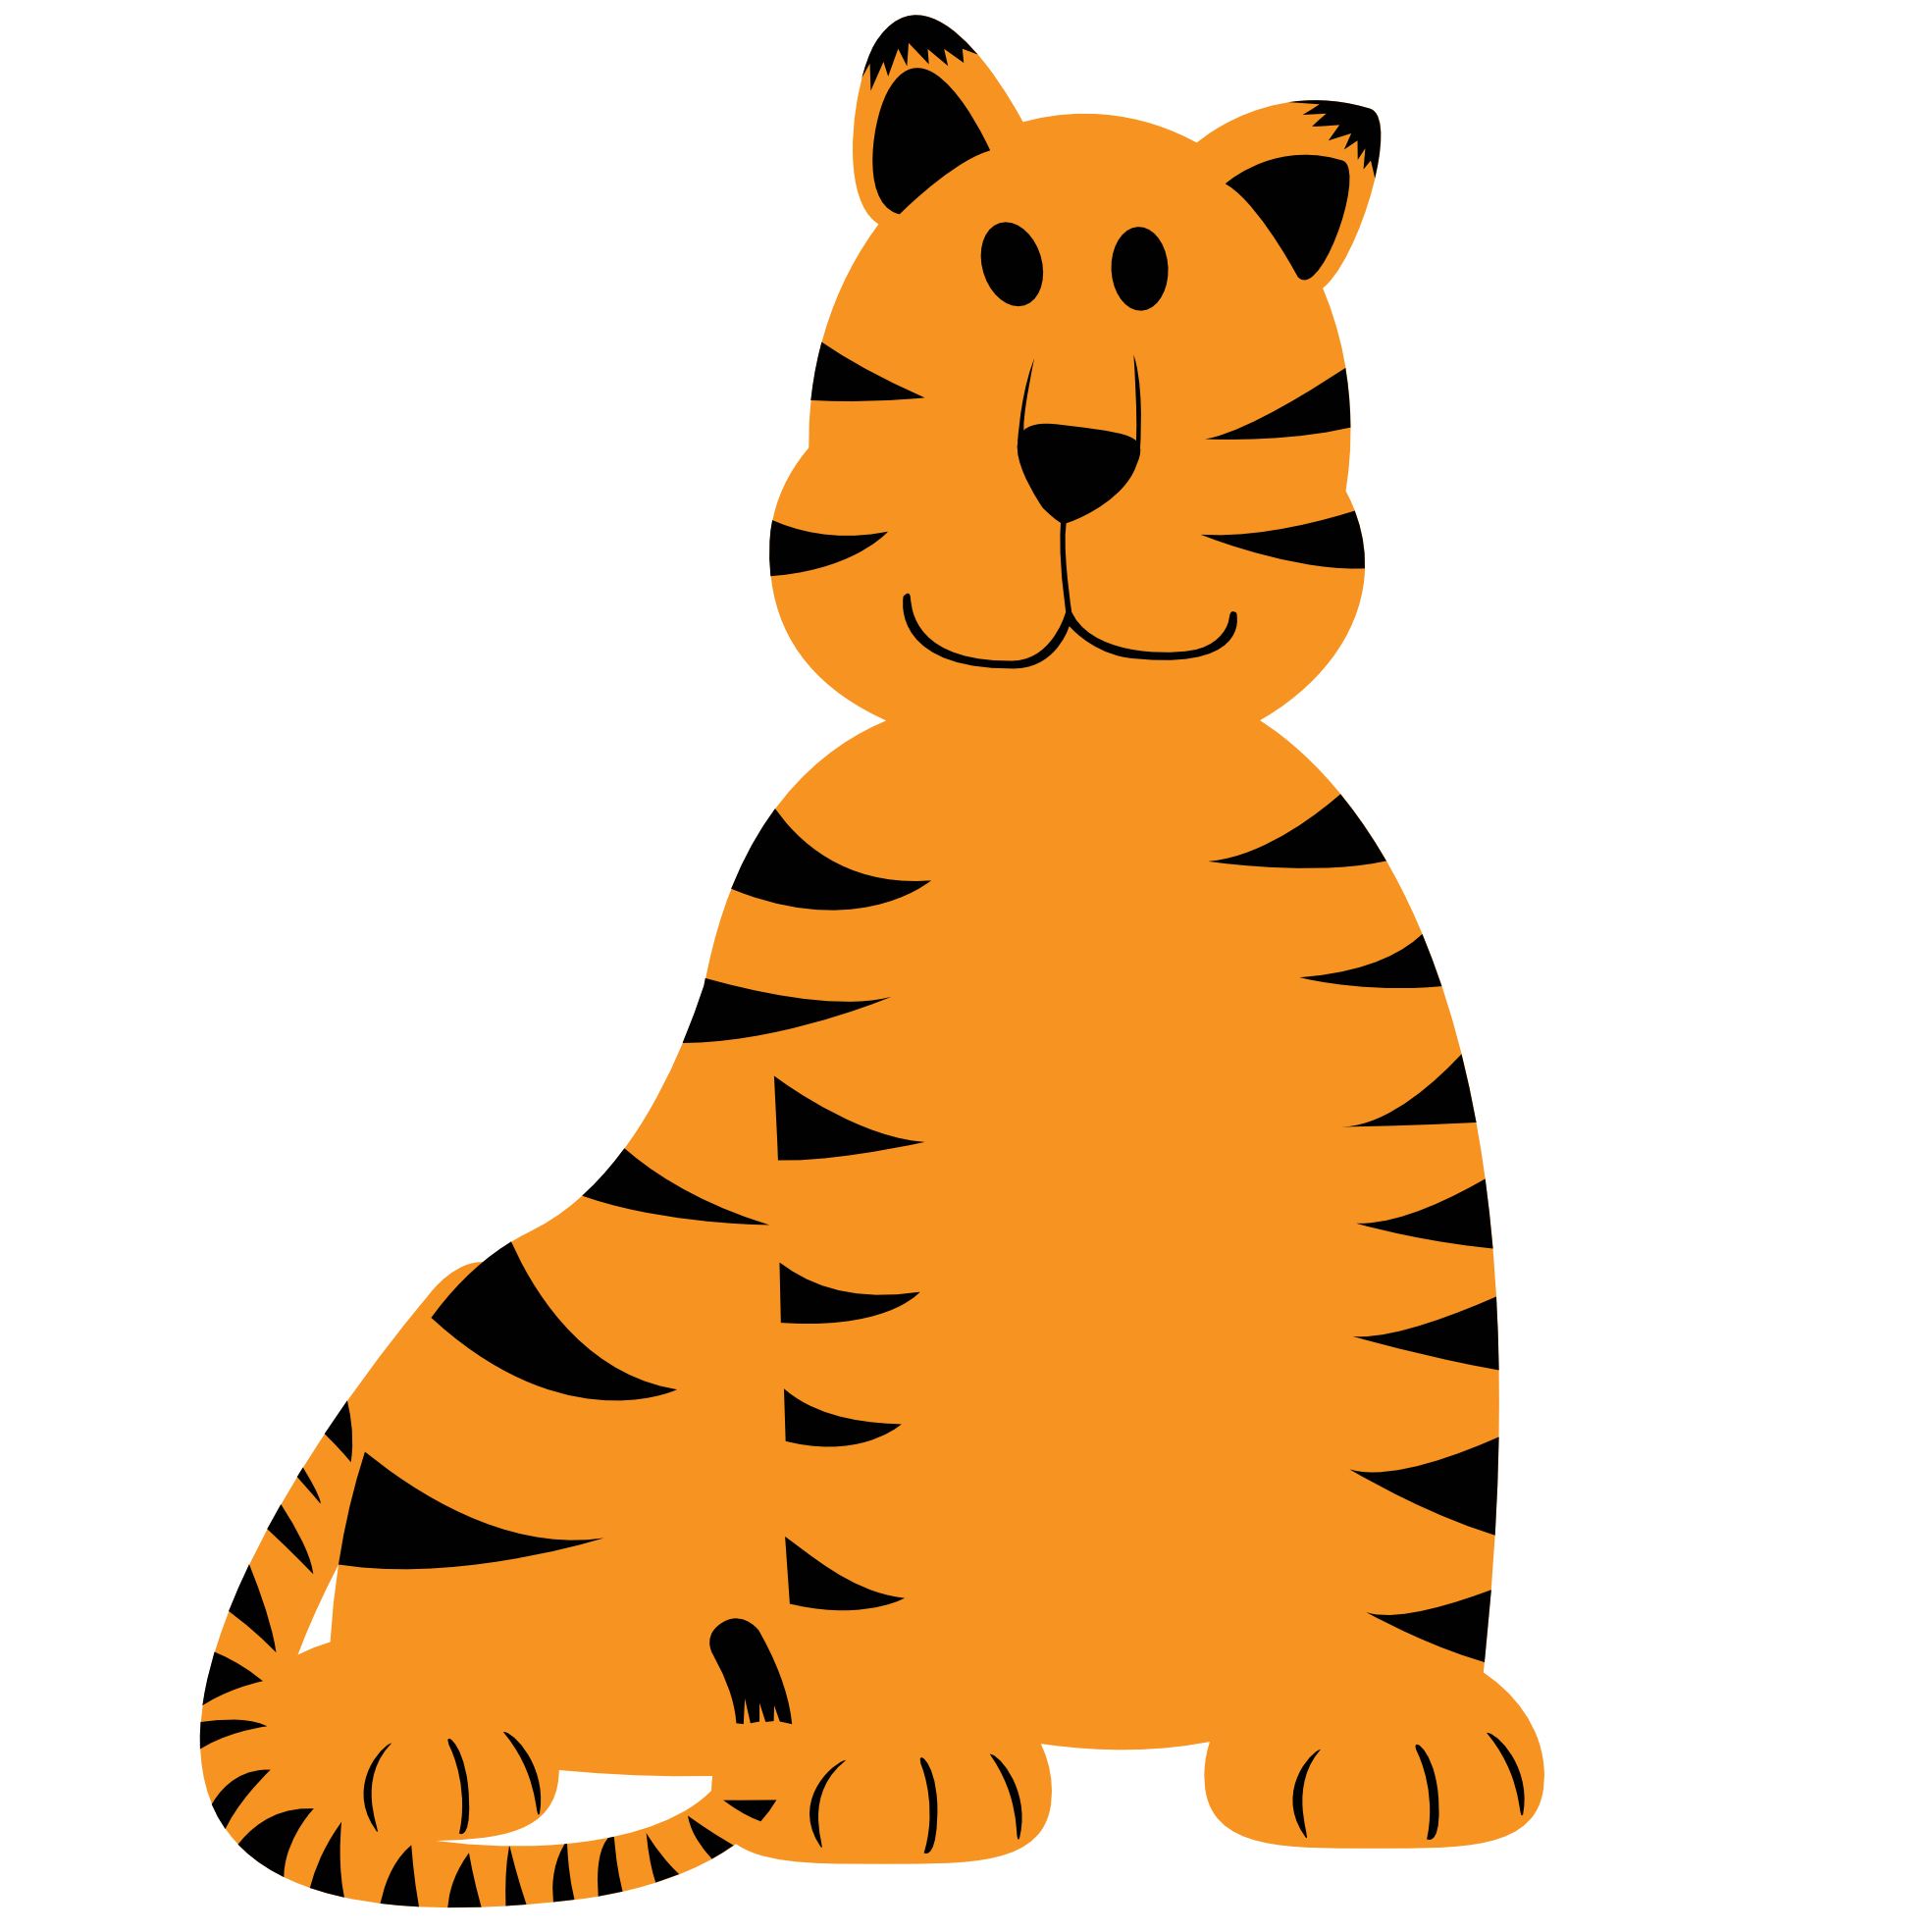 Tiger clip art for kids clipart image #7315